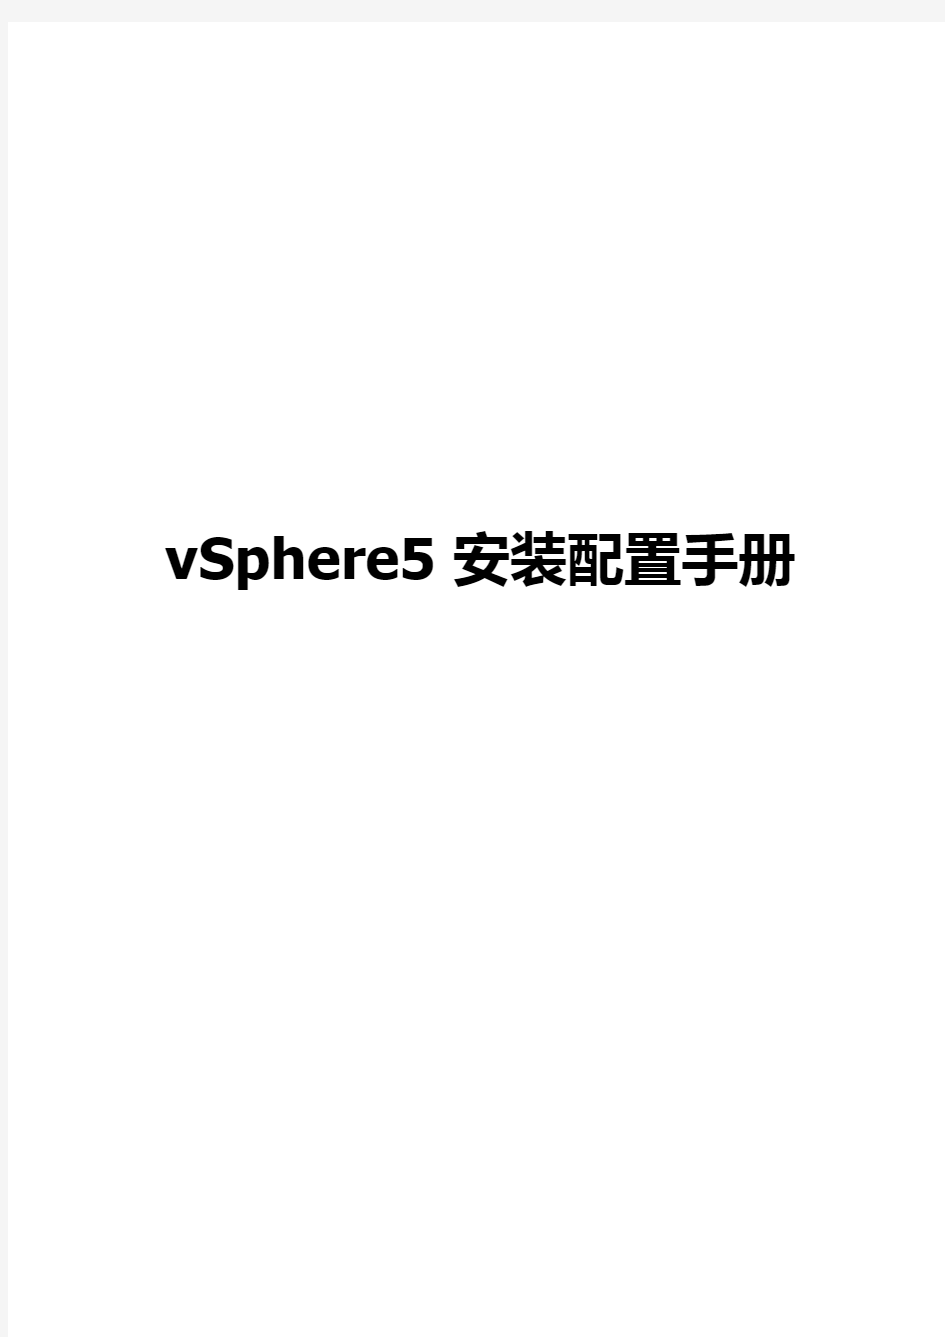 vSphere5安装配置手册